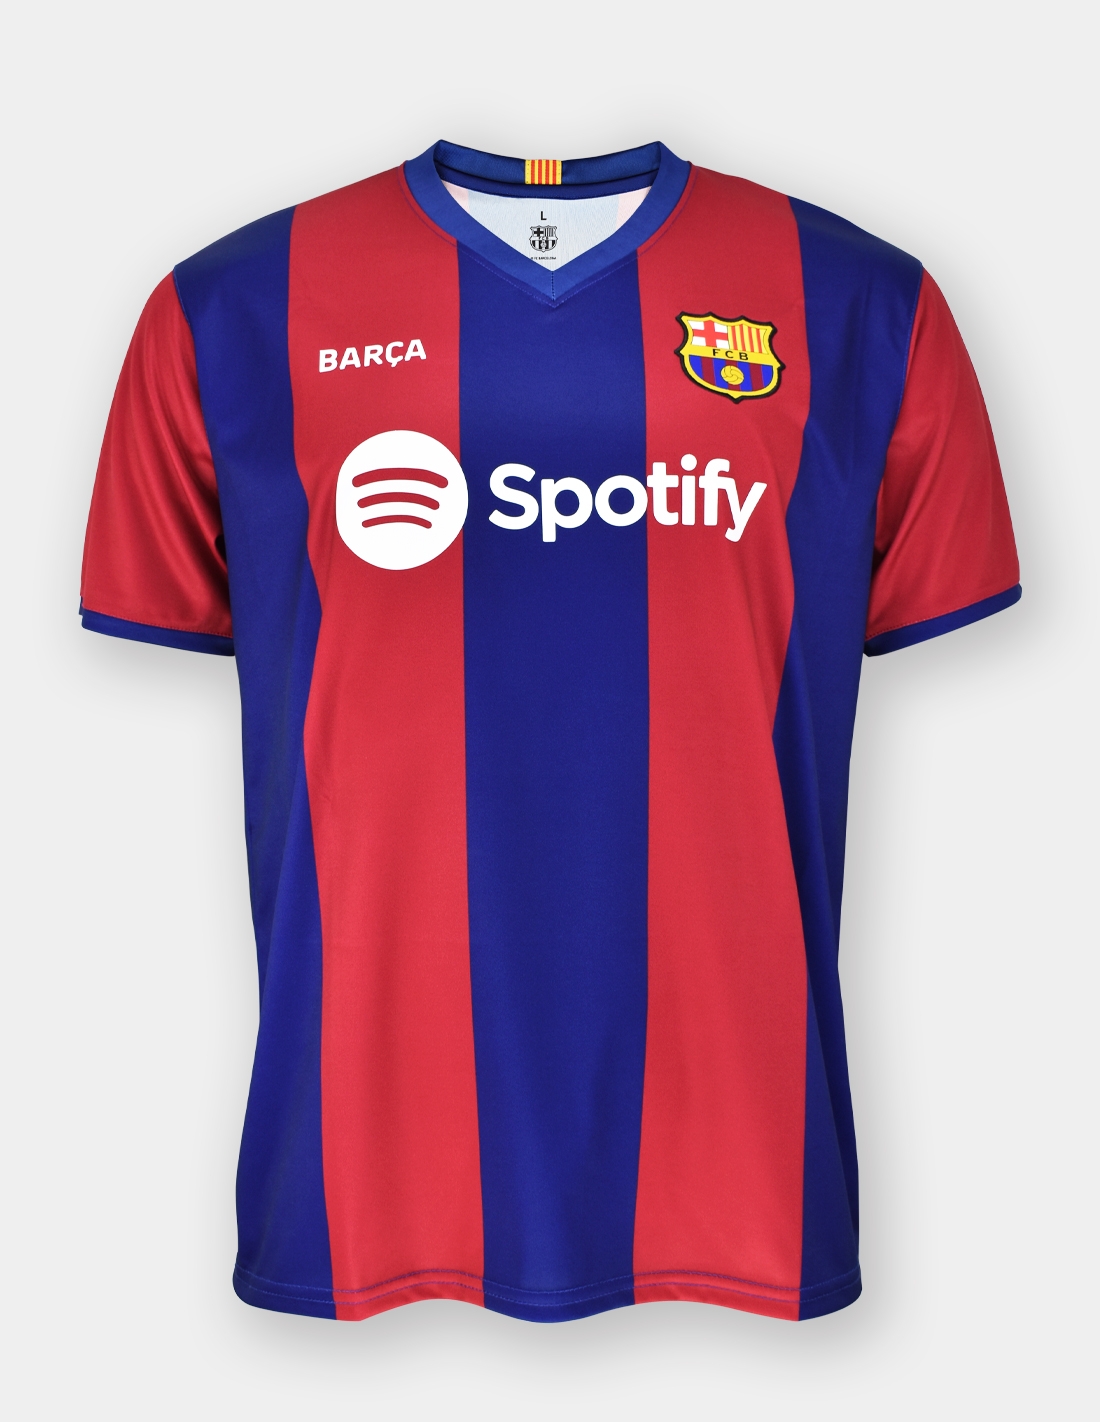 Réplica Oficial FC Barcelona 1ª equipación personalizable Color Blaugrana  Talla 2 Dorsal FC Barcelona Nombre personalizado